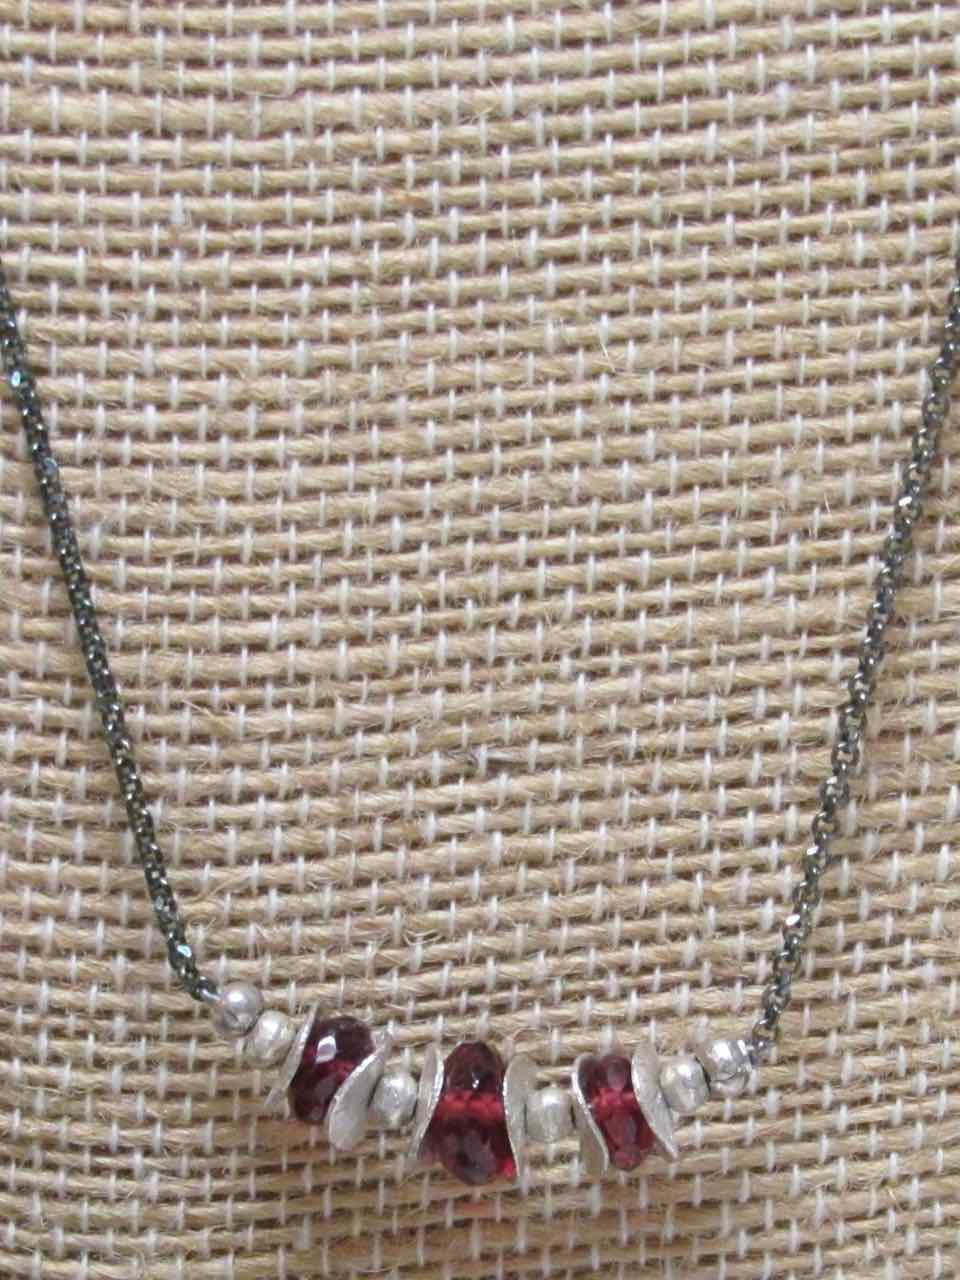 Garnet Disc Necklace